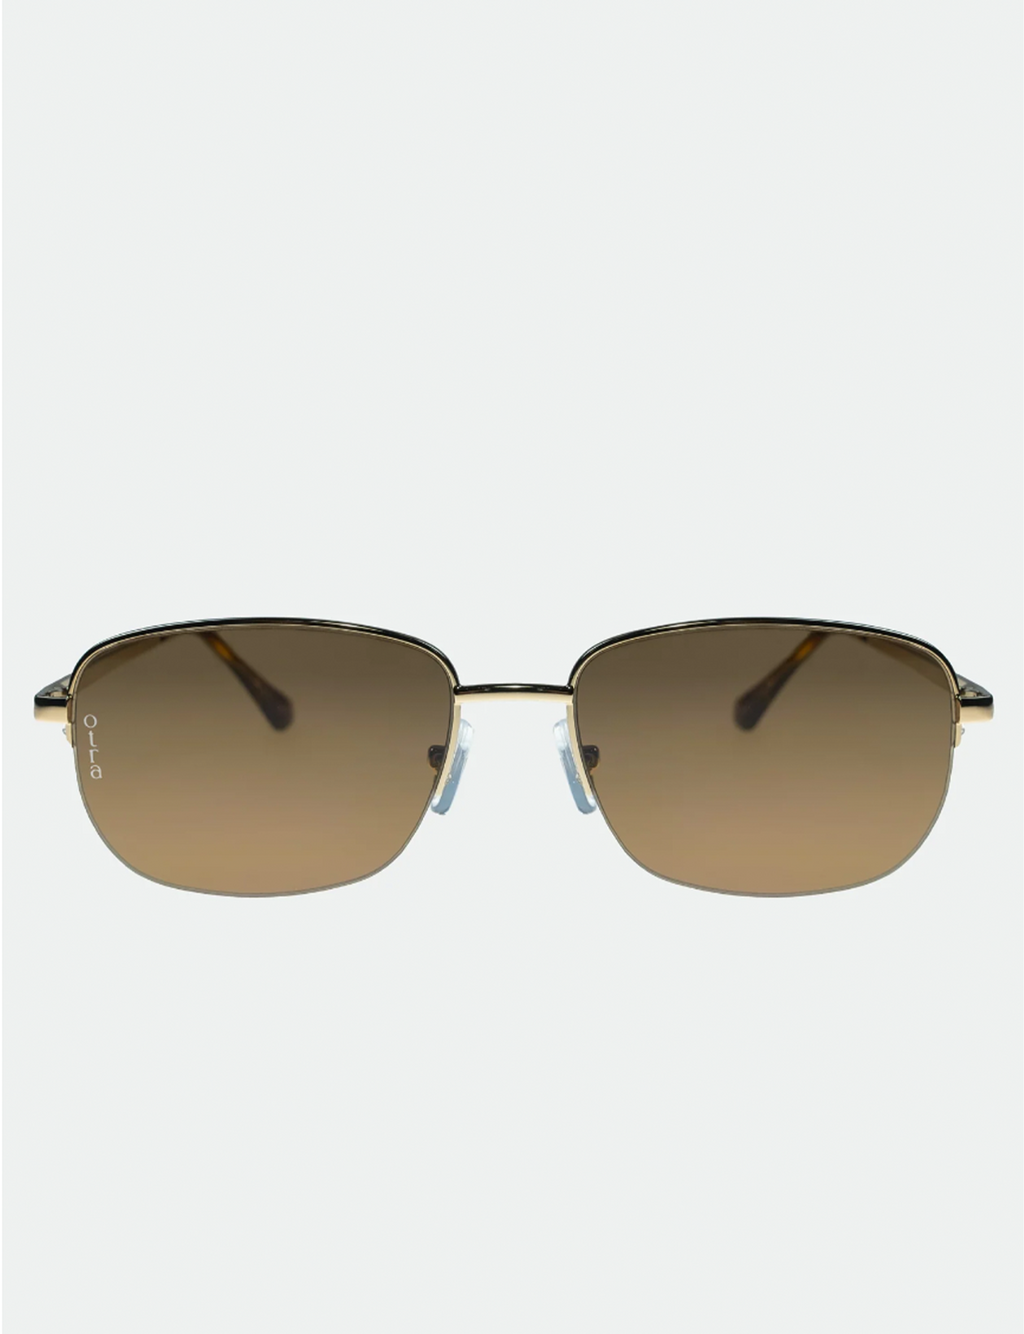 Junior Sunglasses, Gold/Brown